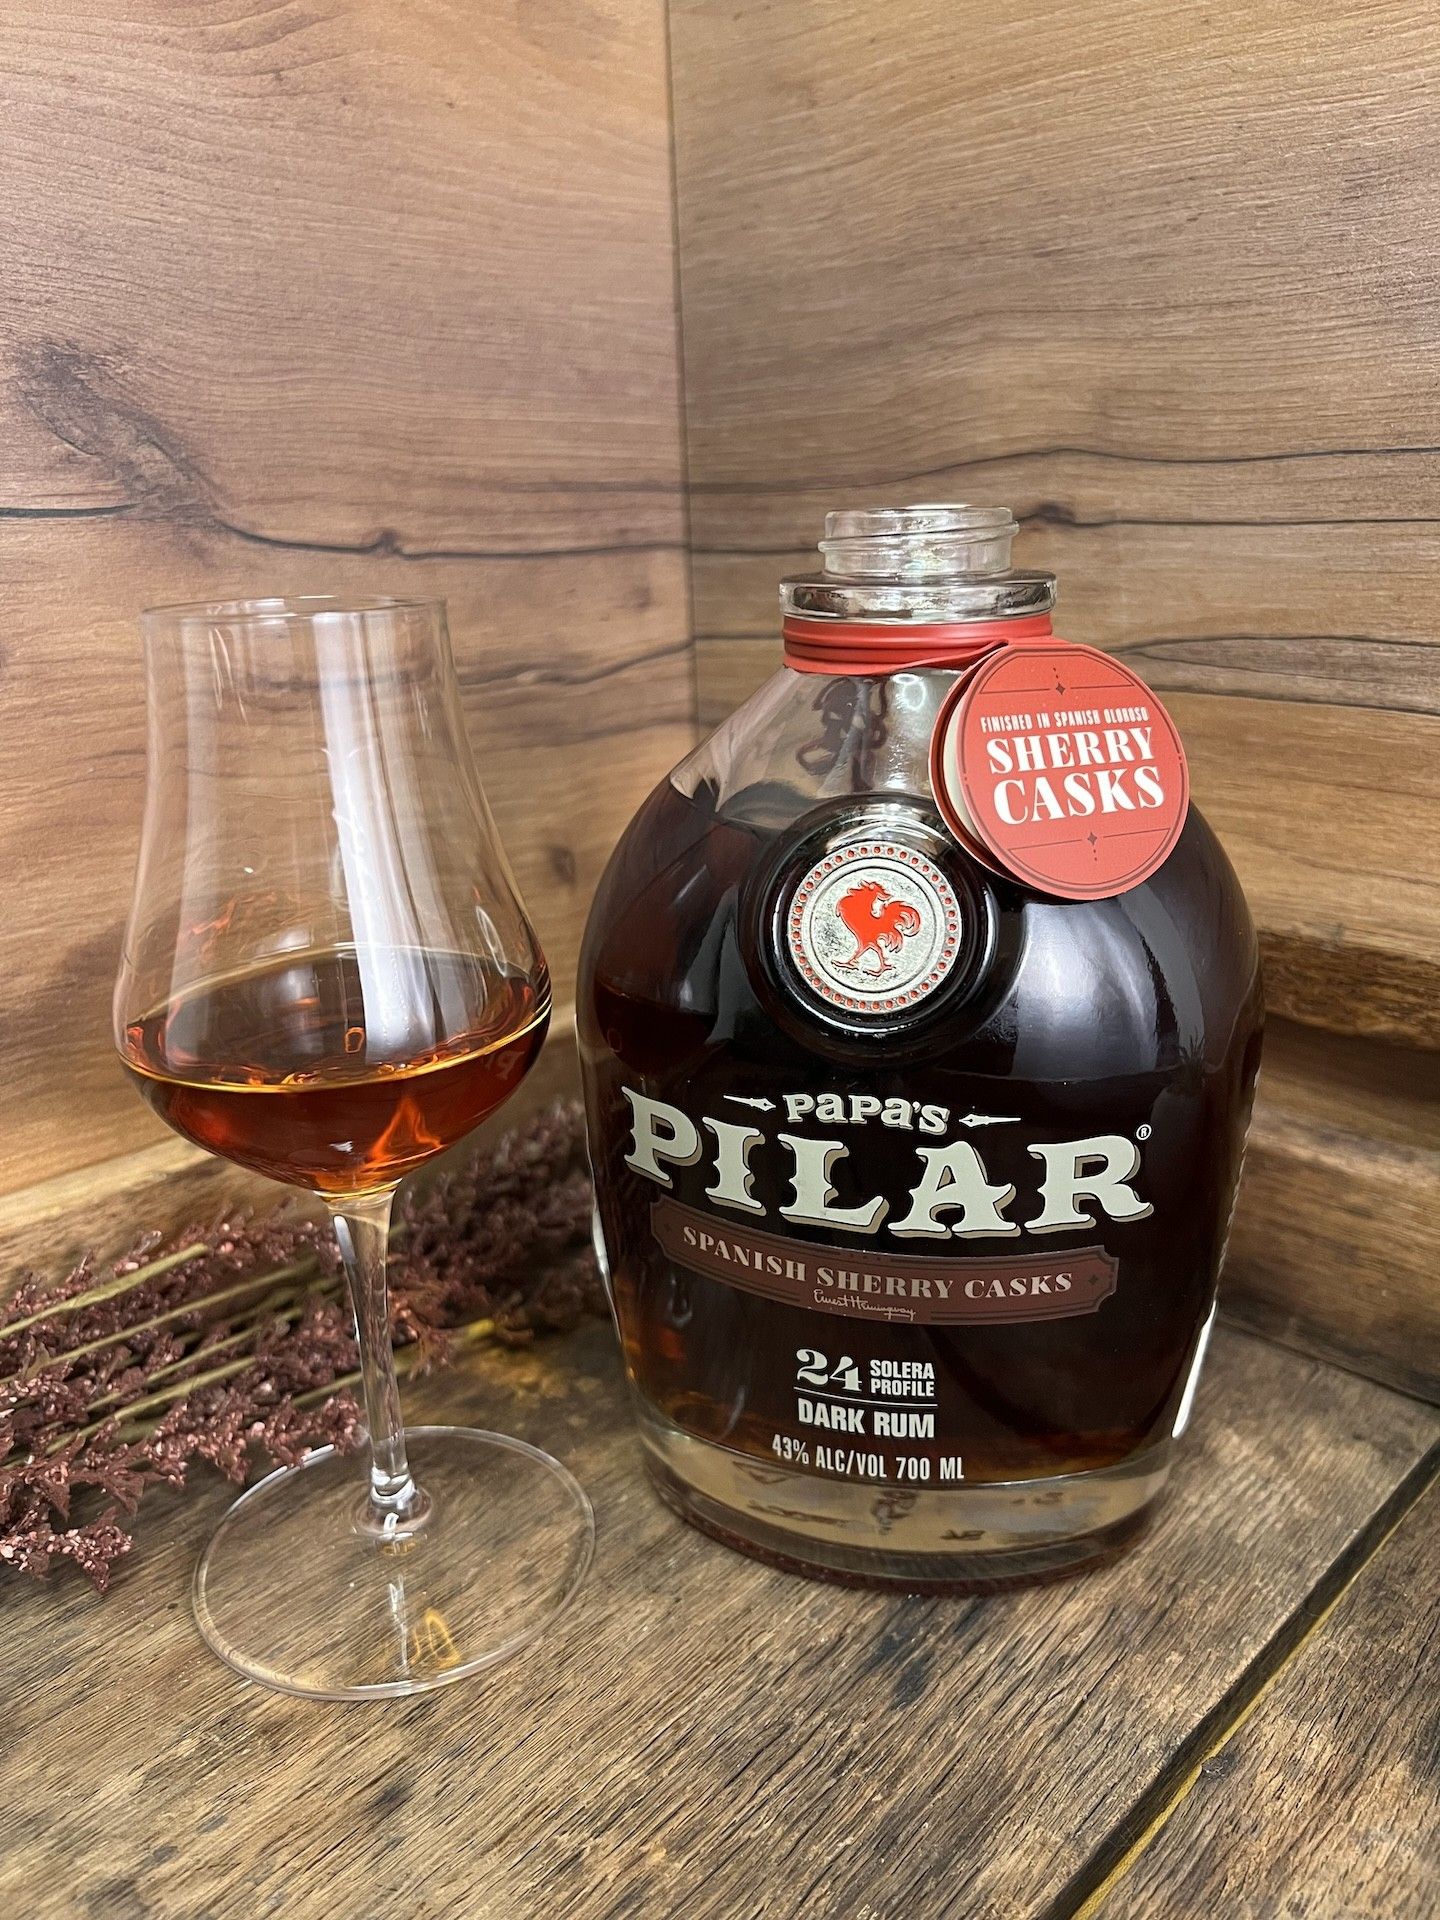 Papa's Pilar Spanish Sherry Casks rum